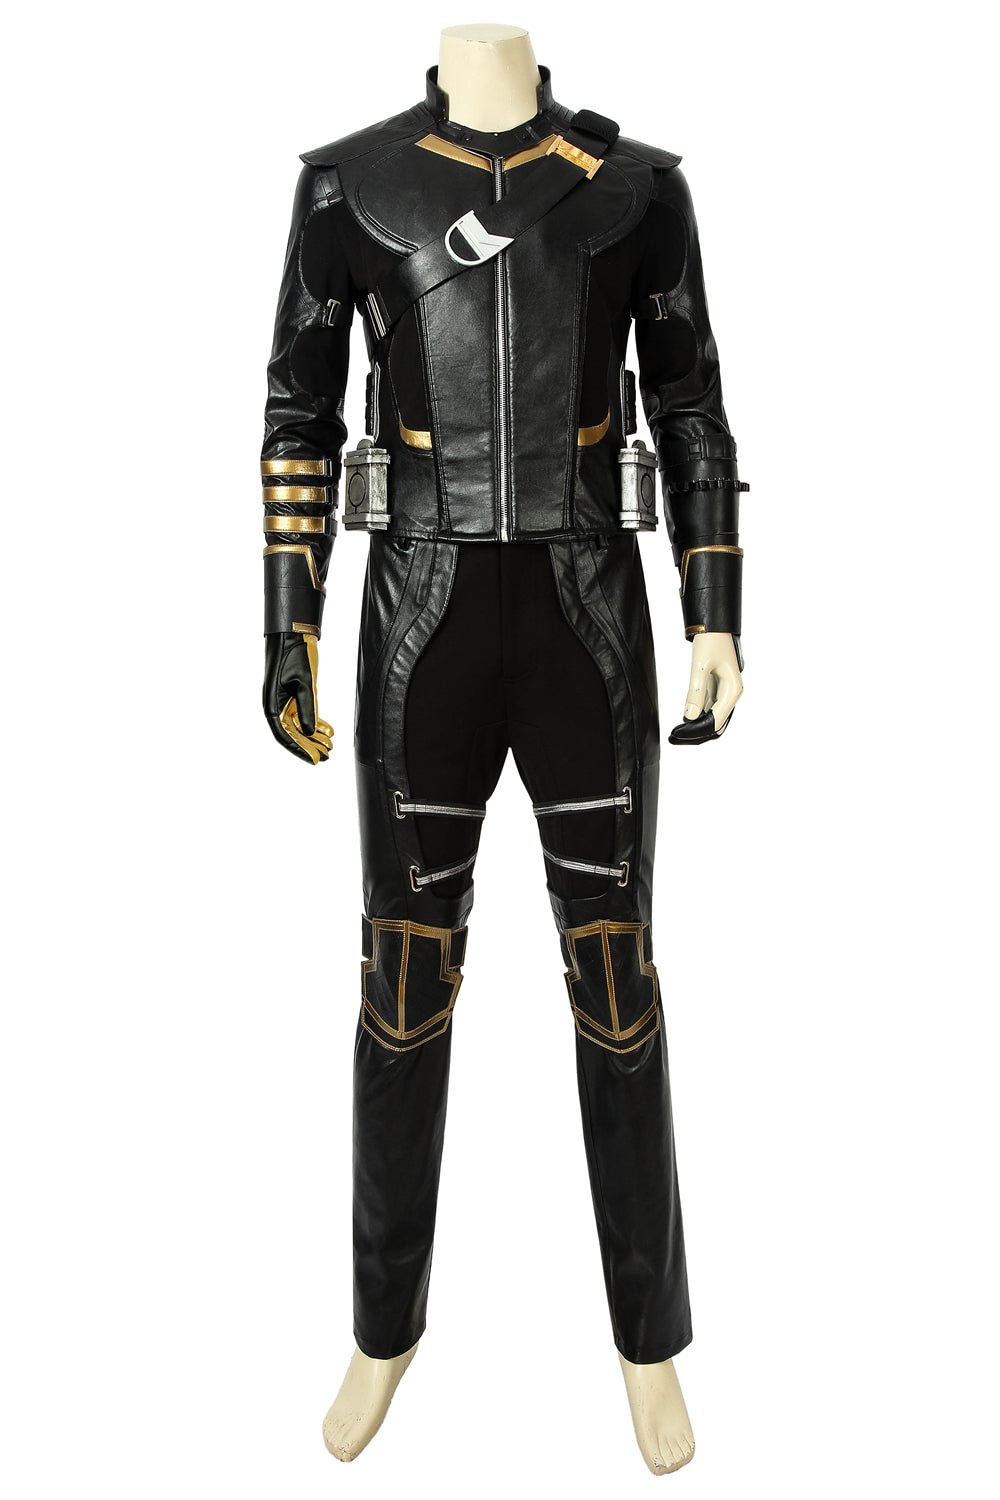 Avengers Endgame Hawkeye Cosplay Costume Clinton Barton Suits